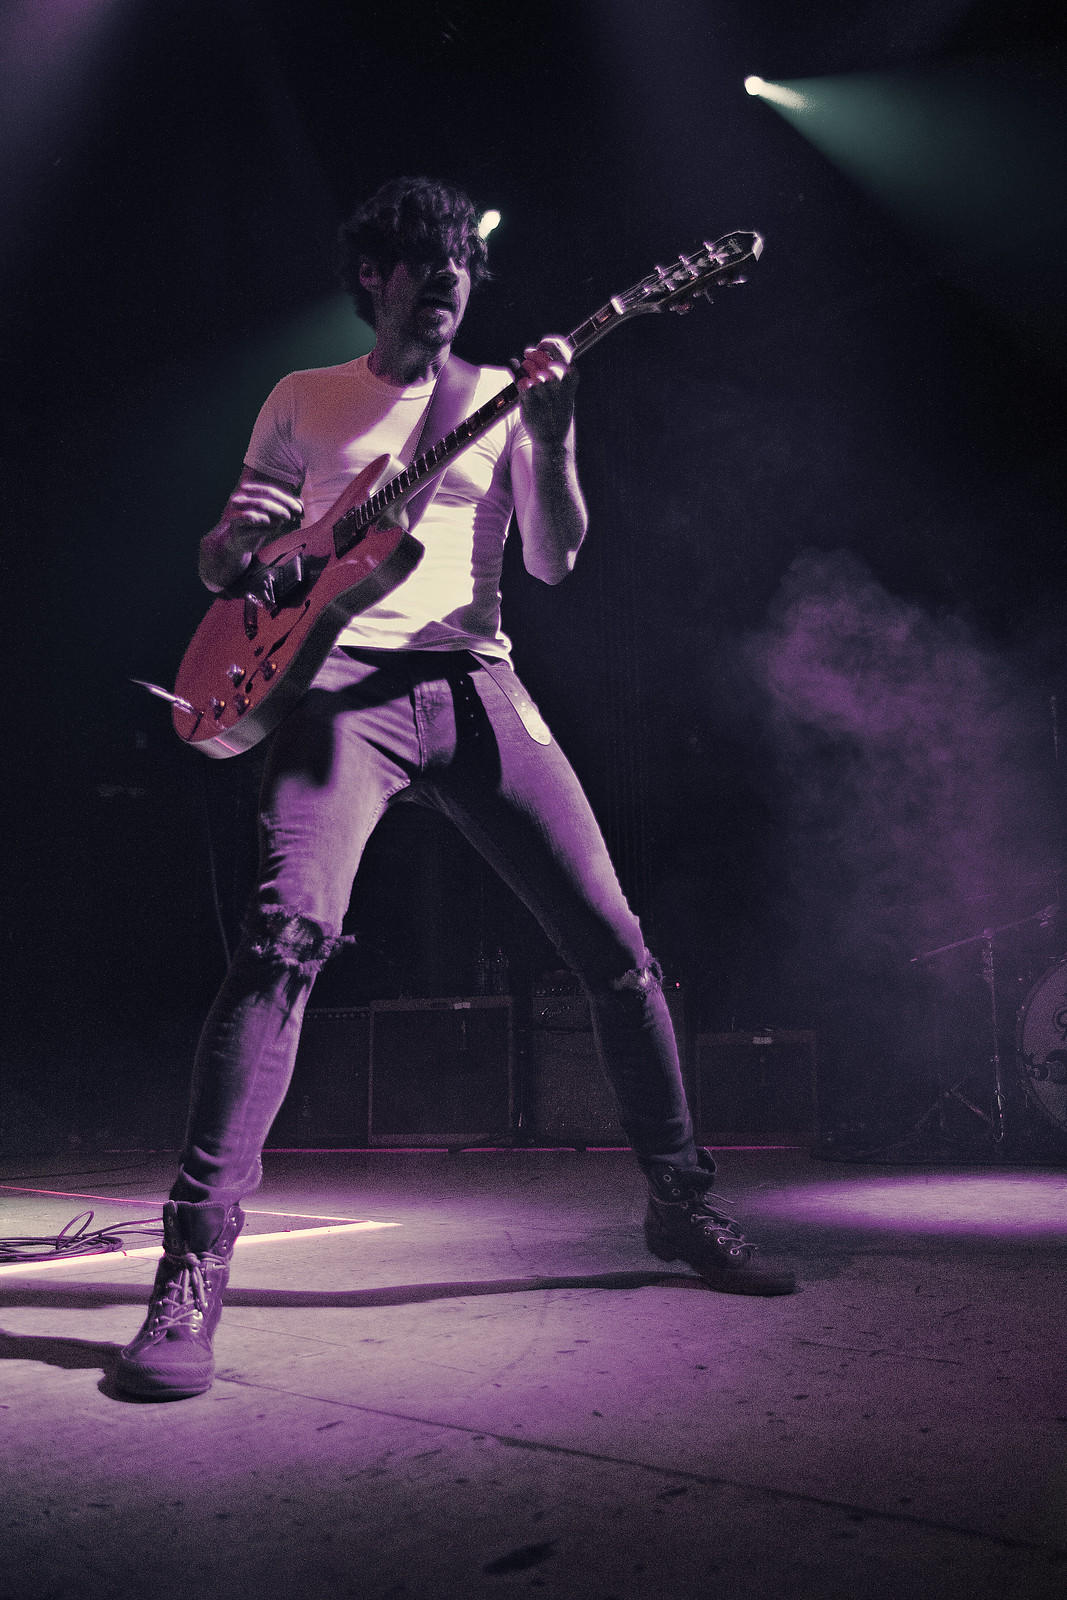 Black Pistol Fire - Denver concert photos